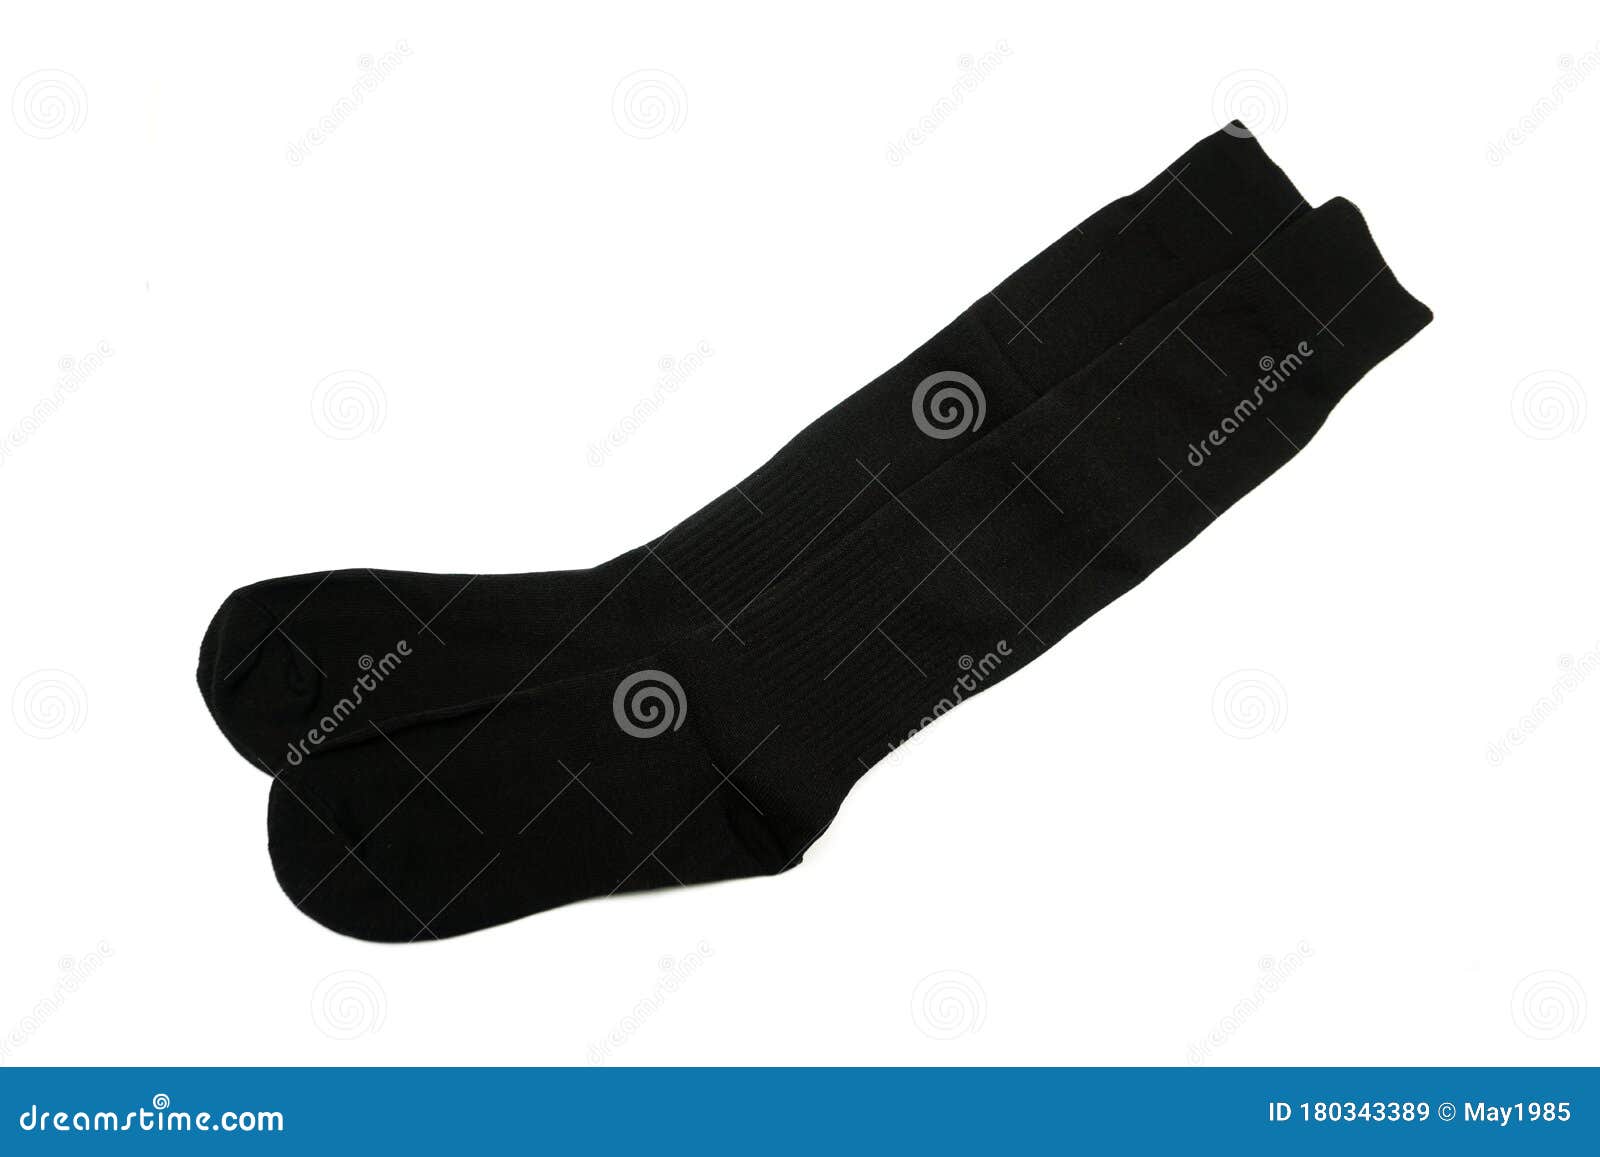 Soccer Socks Isolated on White Background Stock Image - Image of black ...